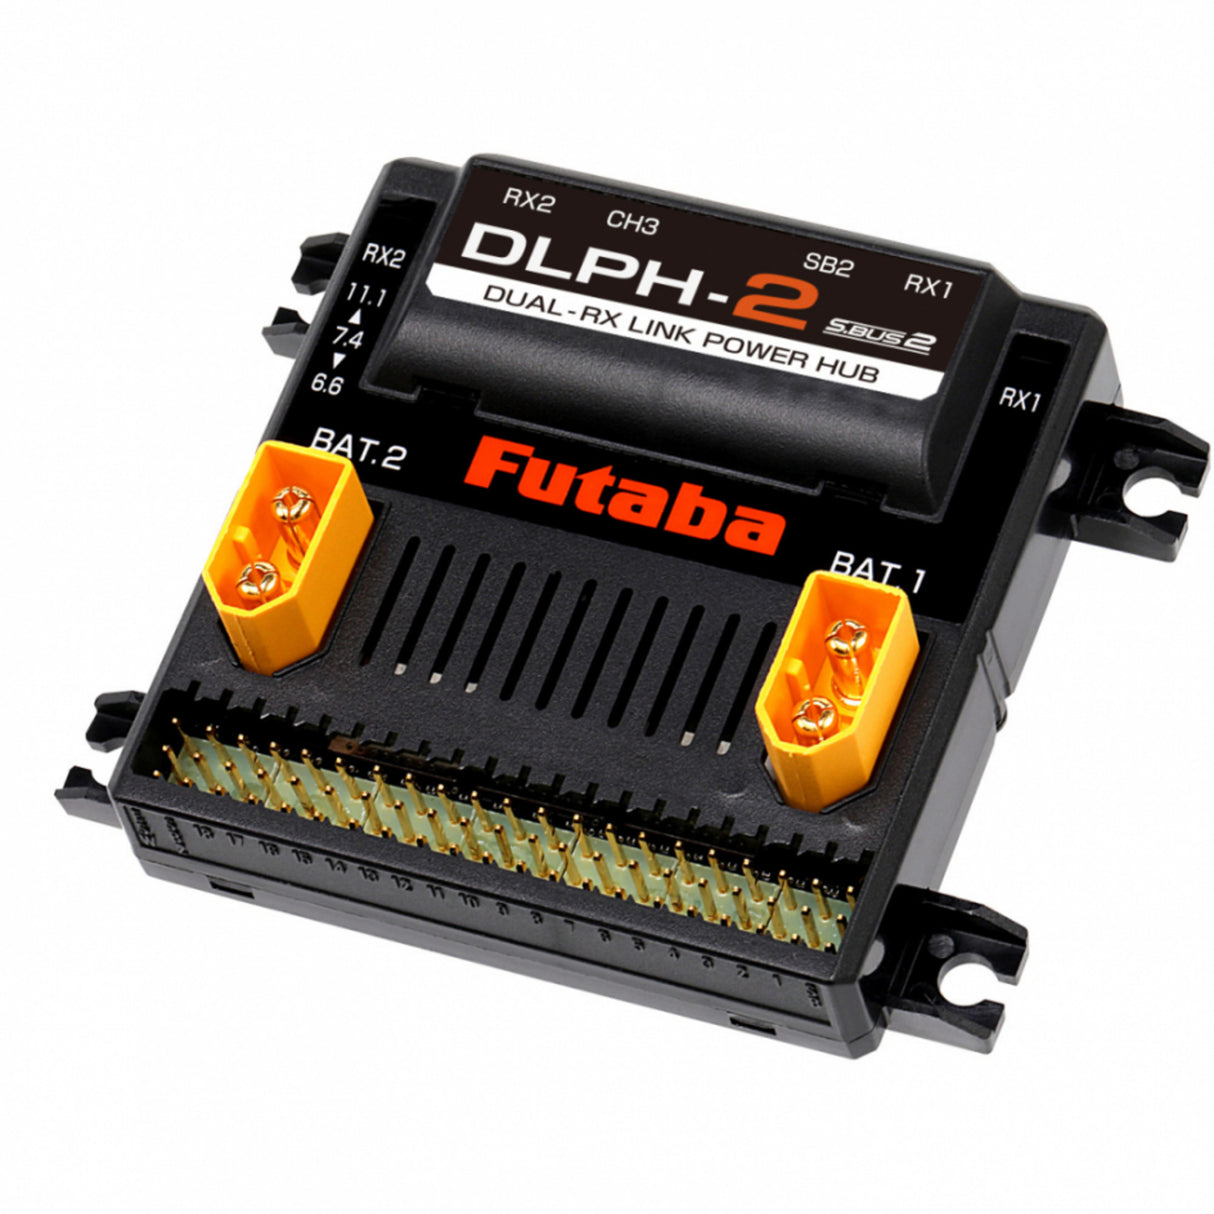 DLPH-2 Intelligent Power Hub (Dual Rx, Dual Battery, Gyro Capable)